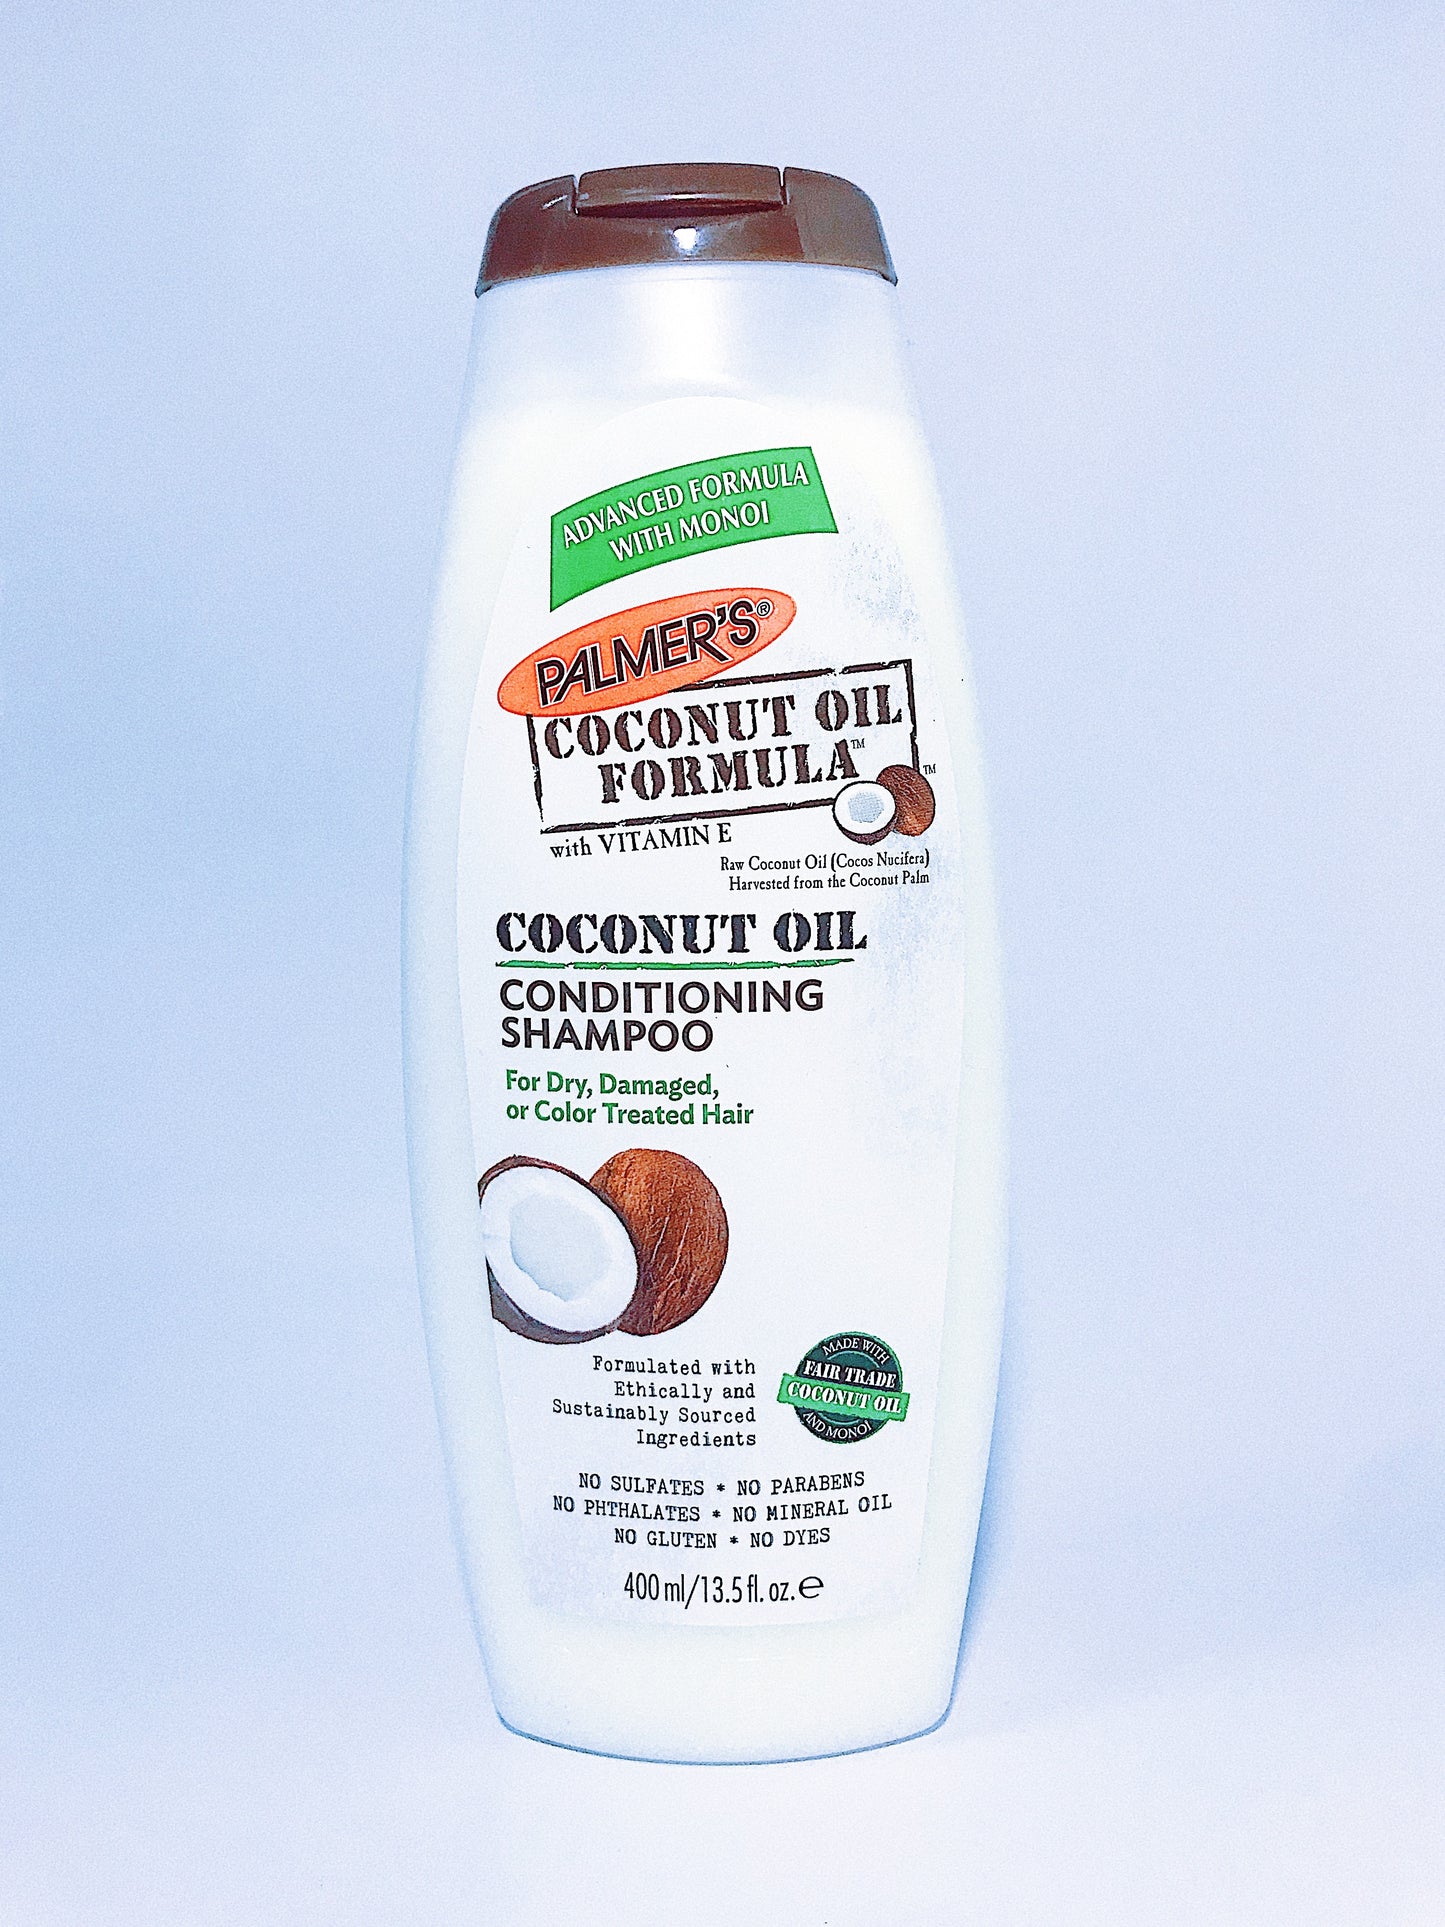 Palmer's Coconut Oil Conditiong Shampoo